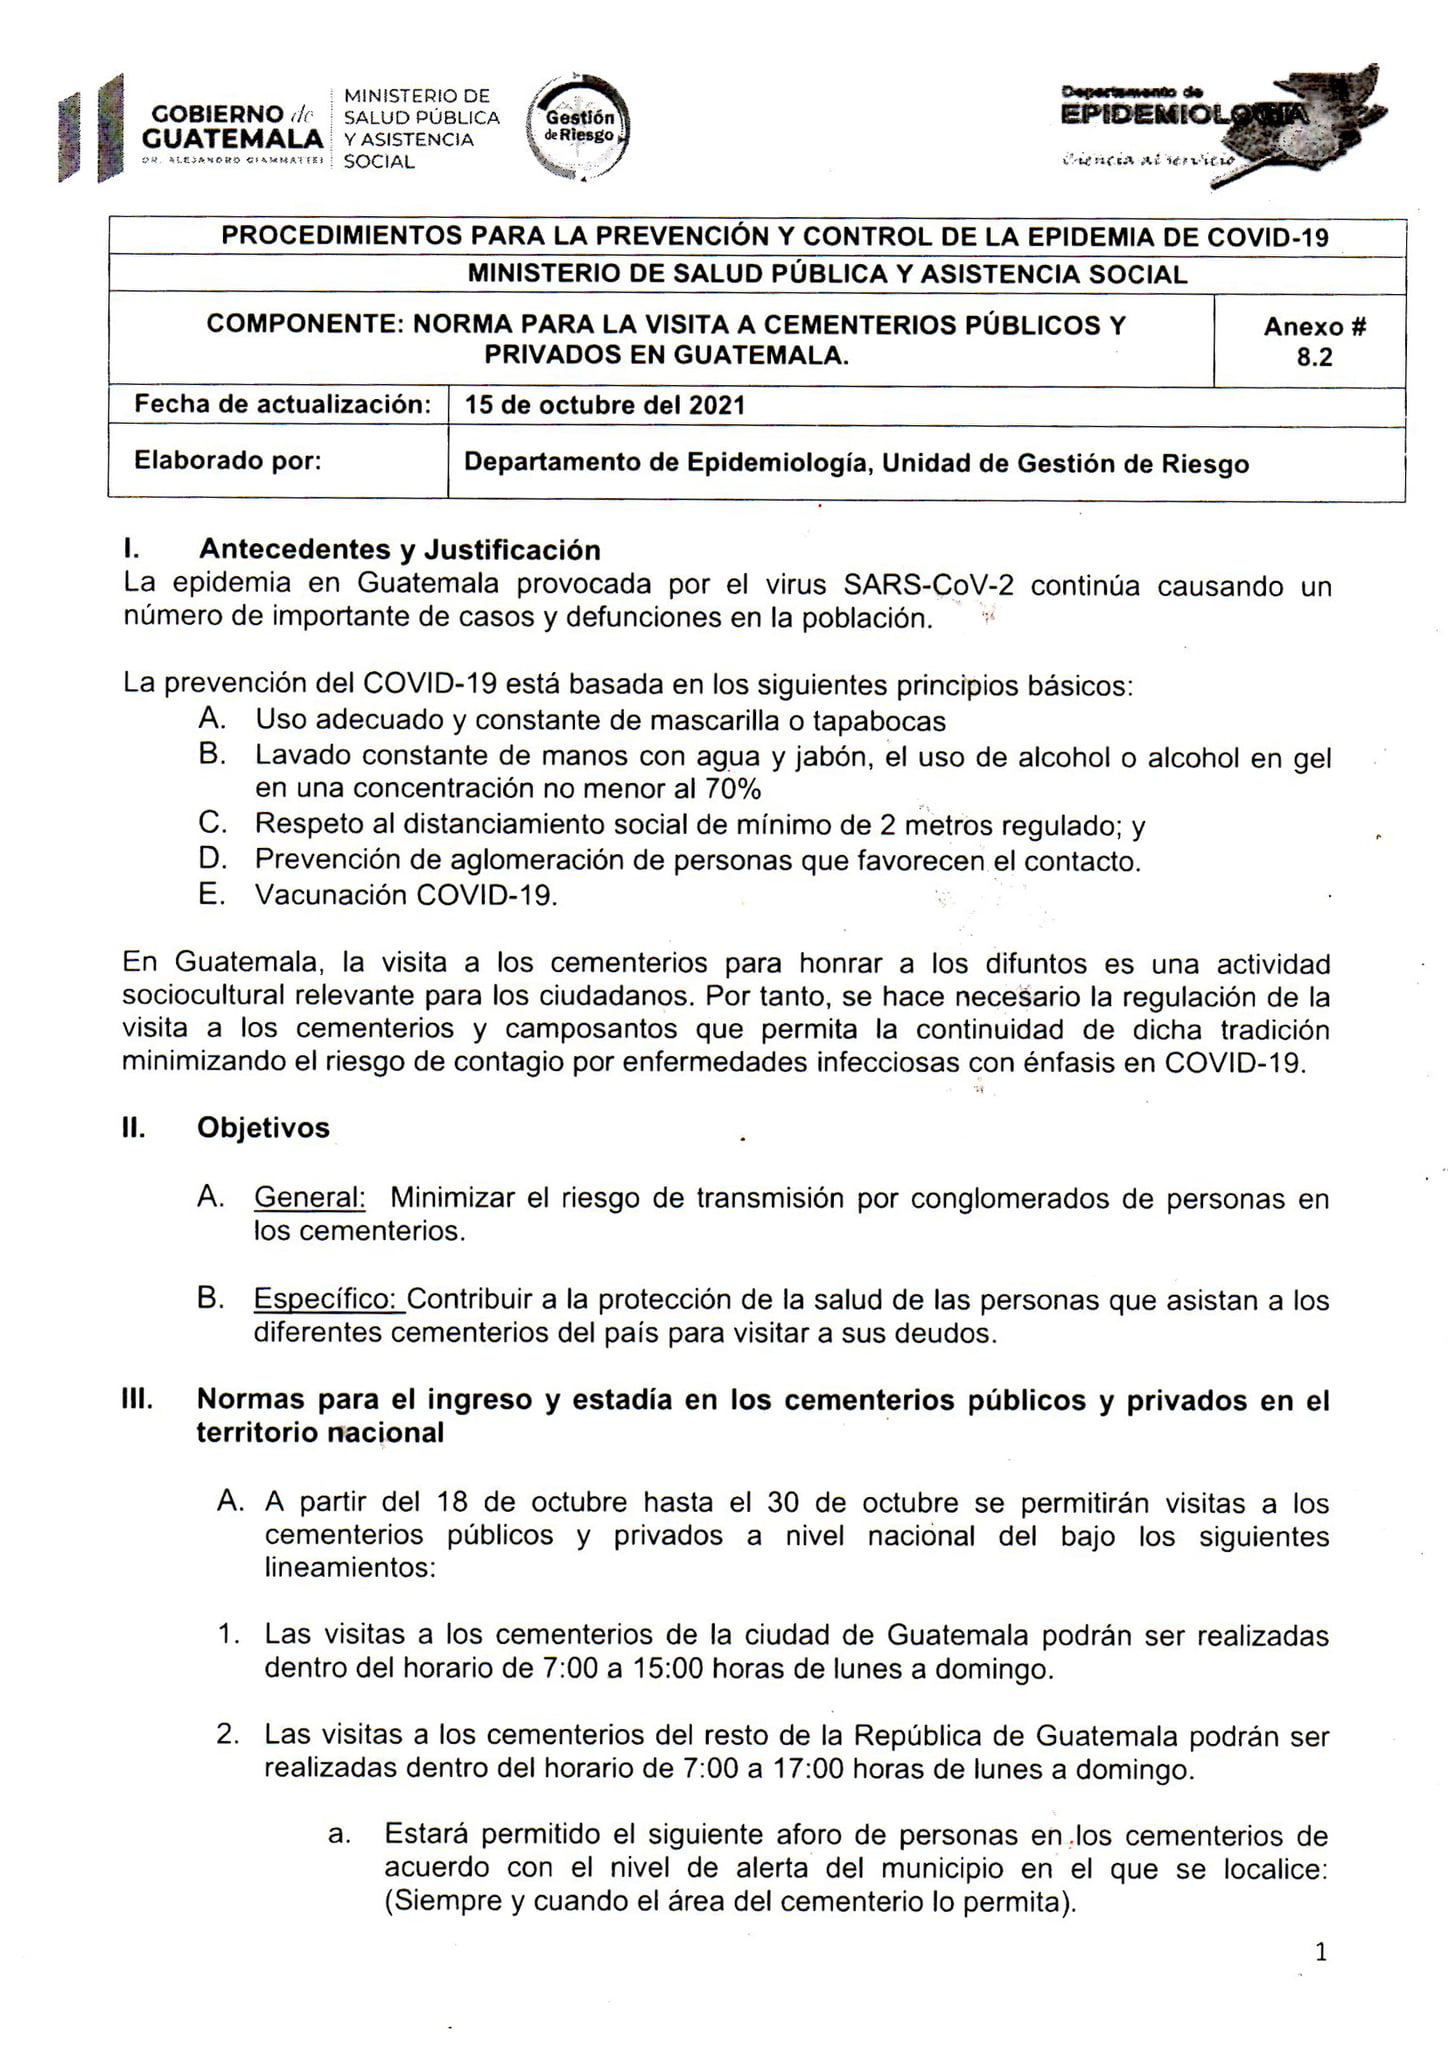 Municipalidad de Palencia, municipalidad, muni palencia, Palencia, Beto Reyes, Guadalupe Reyes, Alberto Reyes